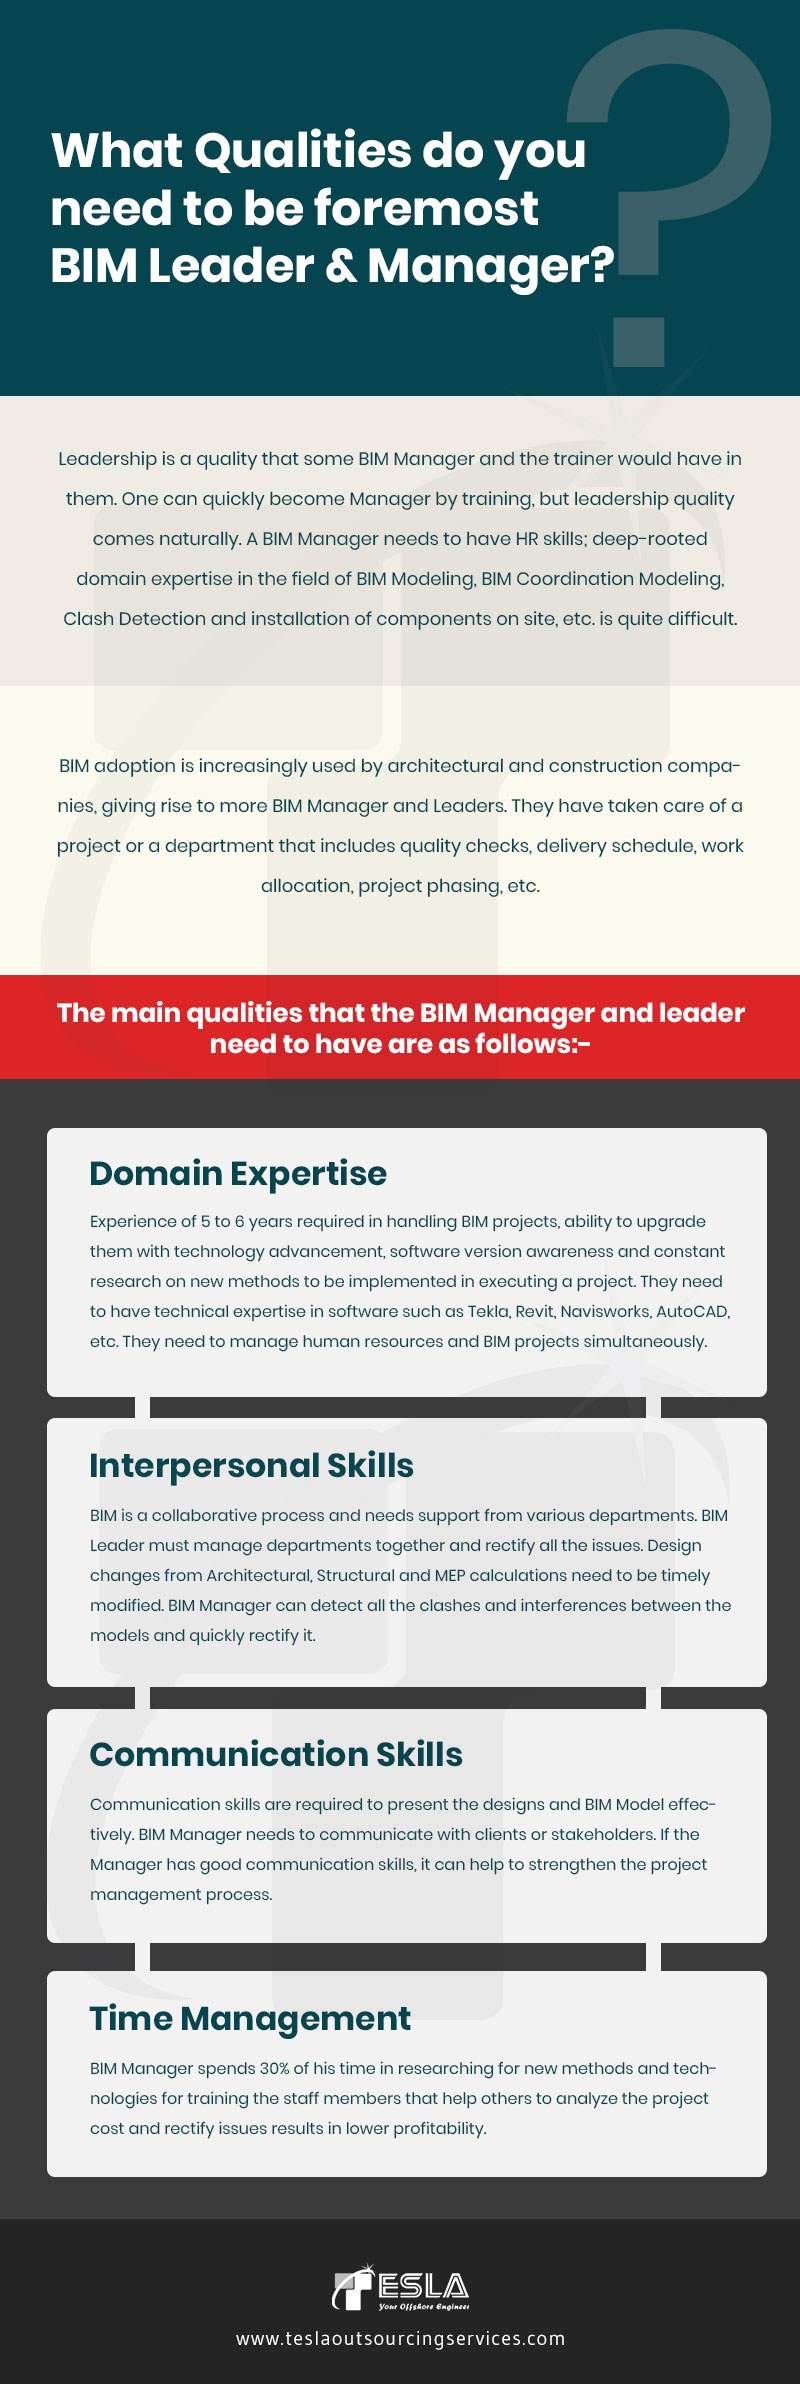 BIM Leader & Manager Qualities